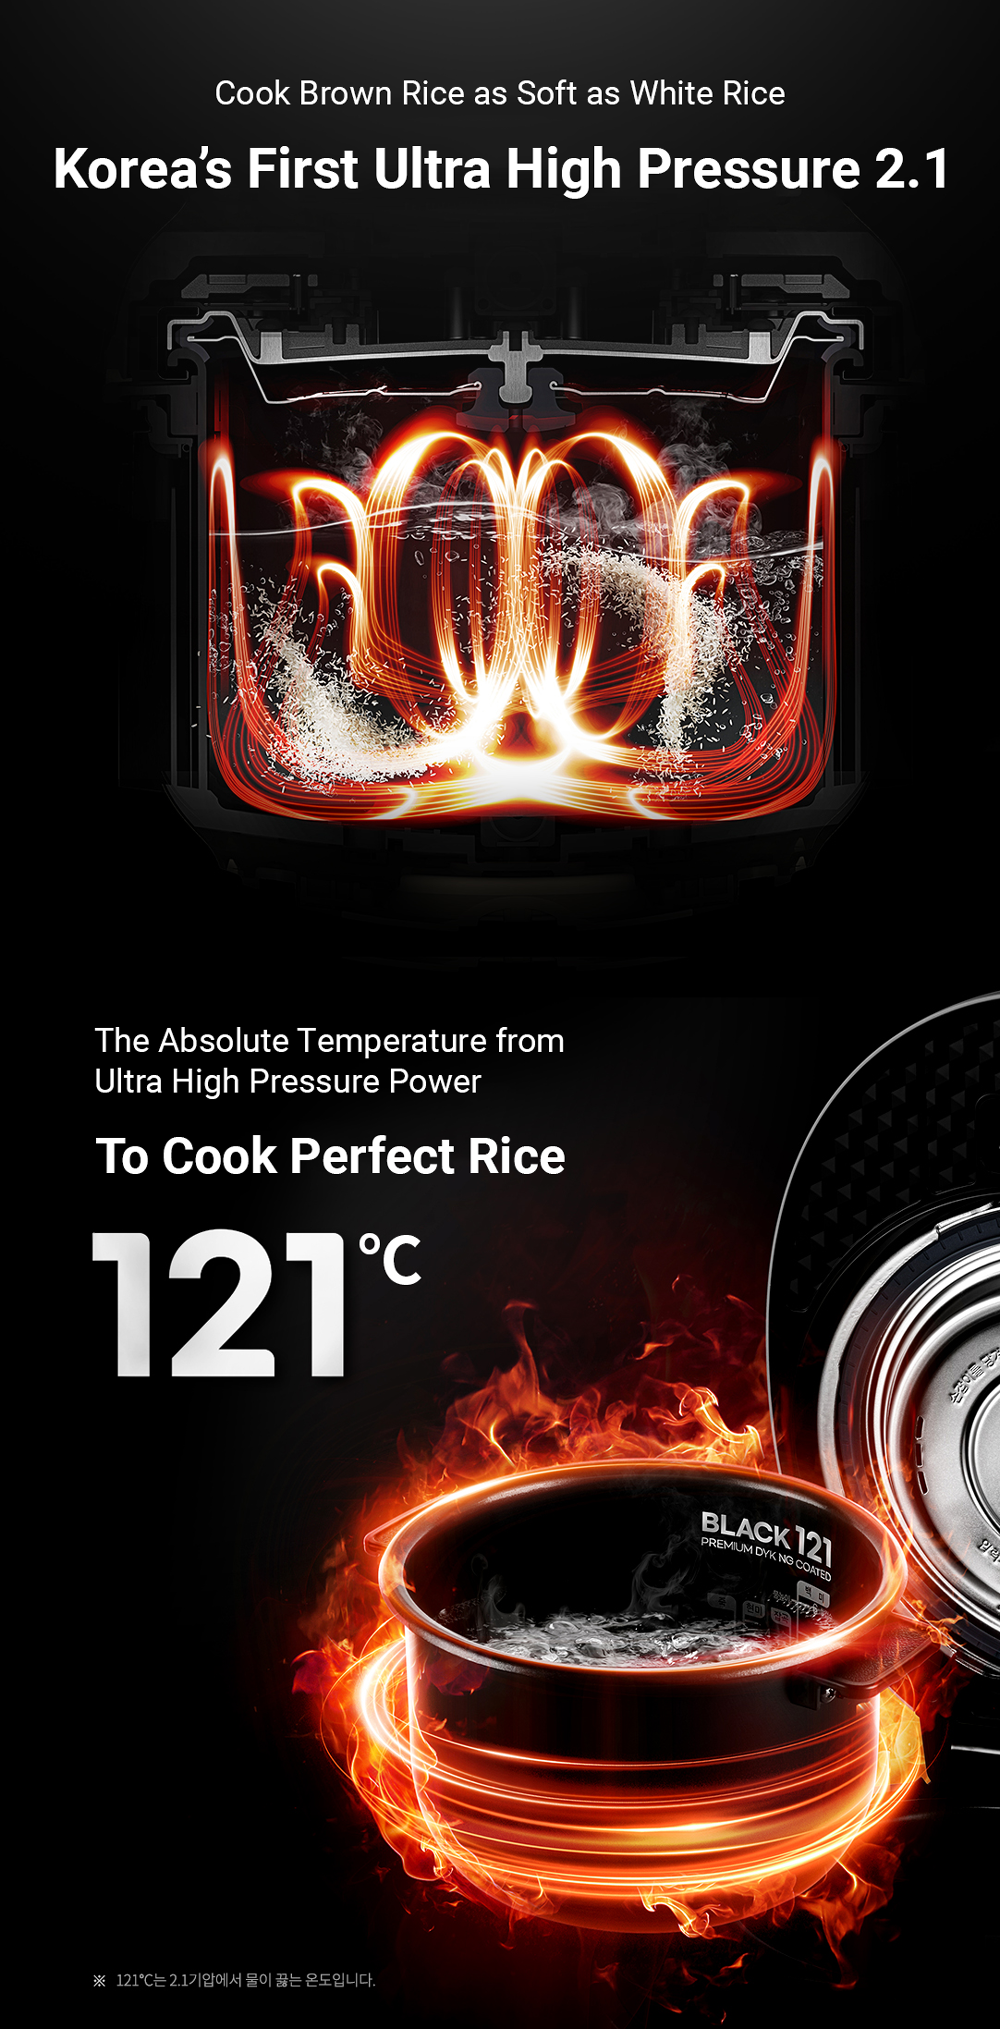 Cuchen 121°C IH Pressure Rice Cooker CRT-RPK0641MUS - Cuchen US